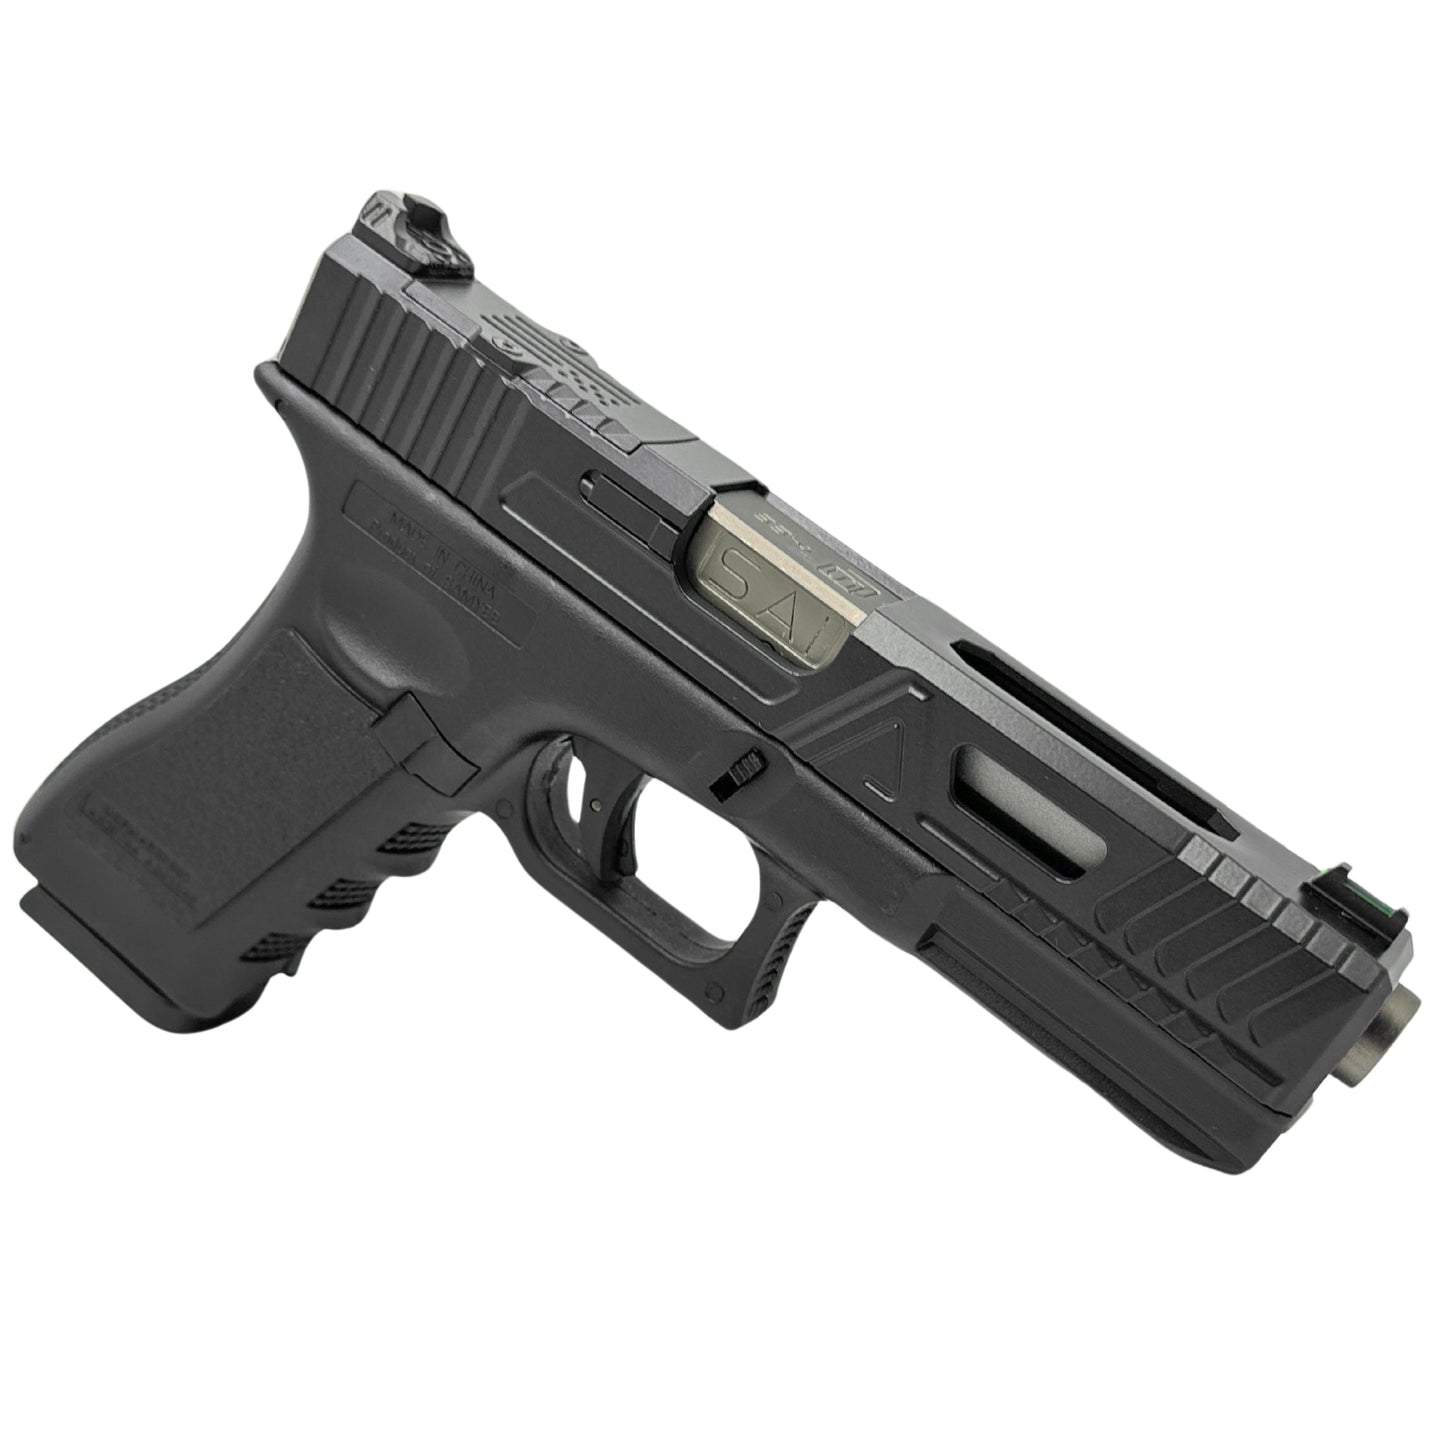 SAI G17 Metal Tactical Manual Pistol - Gel Blaster